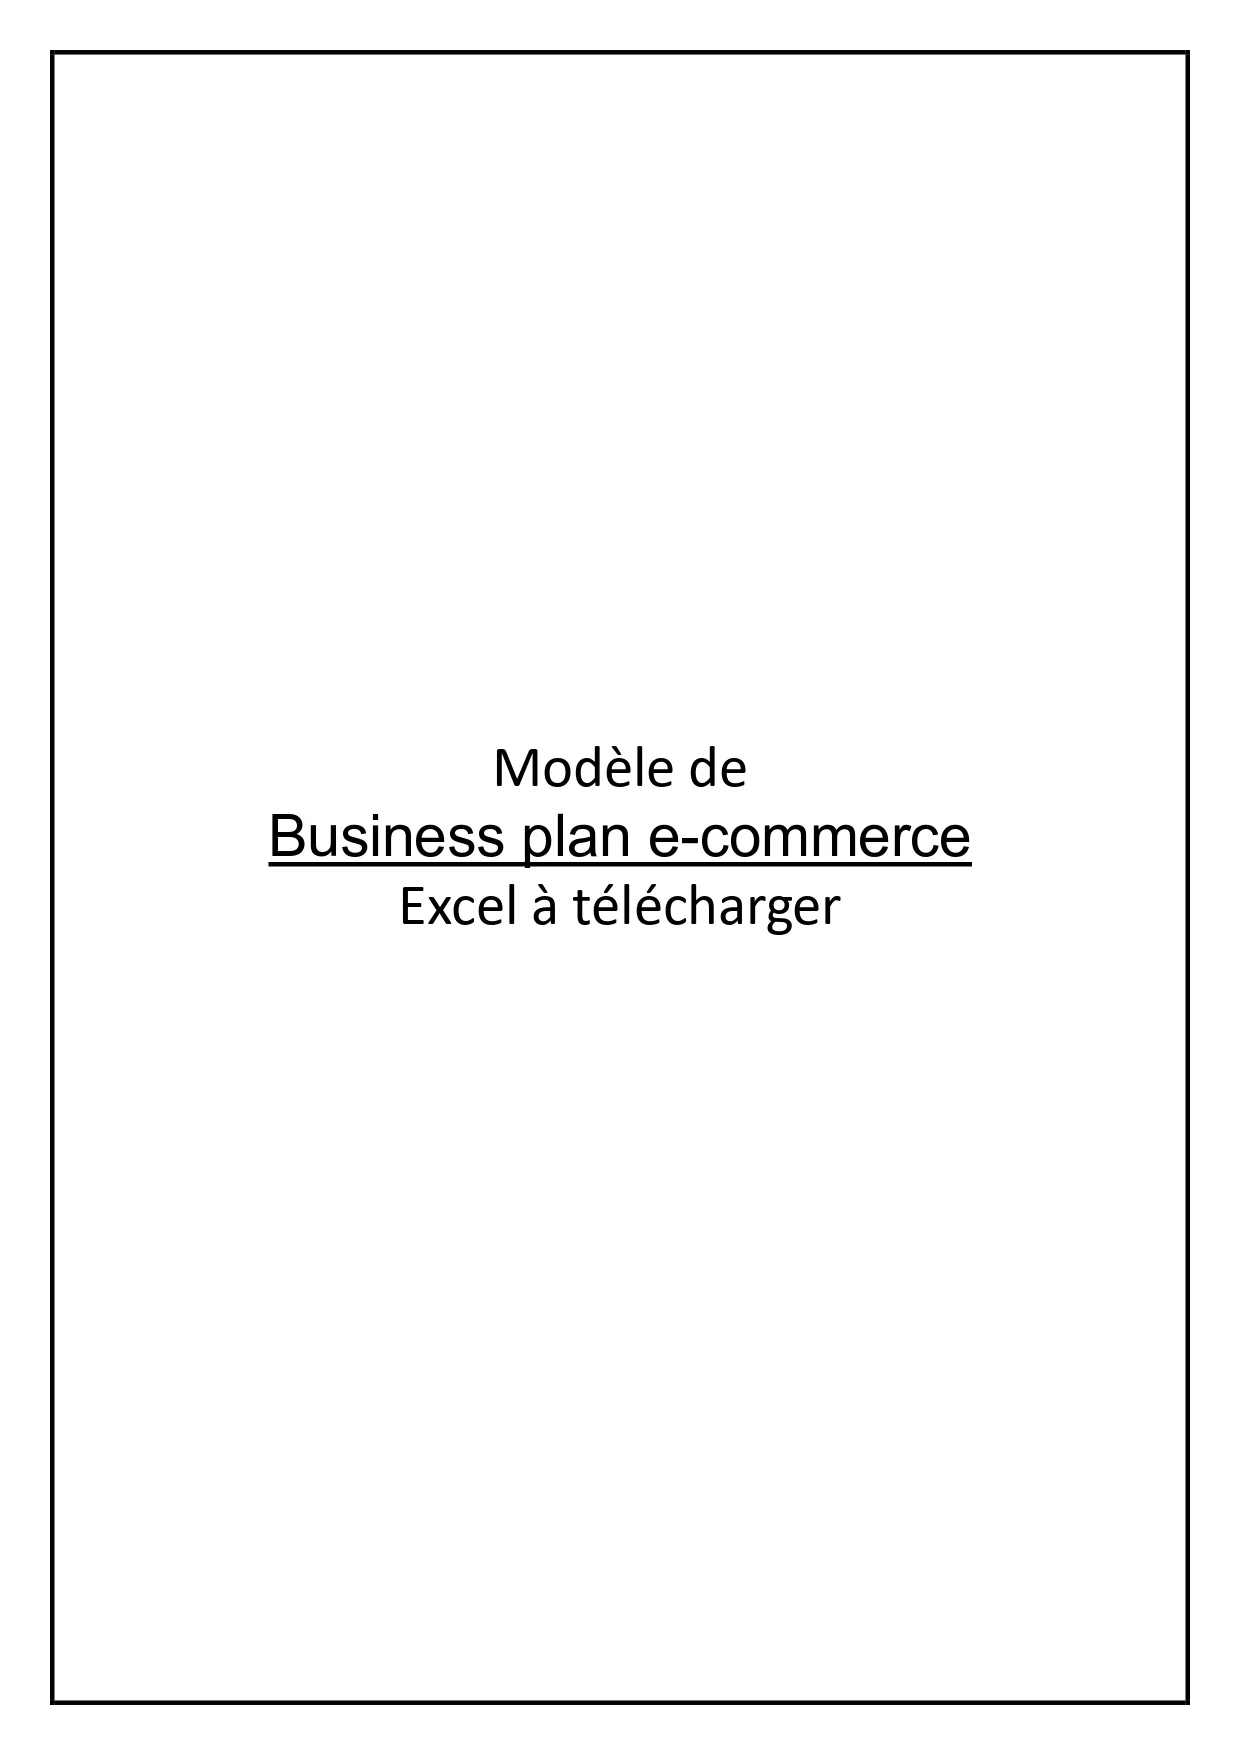 Business plan e-commerce